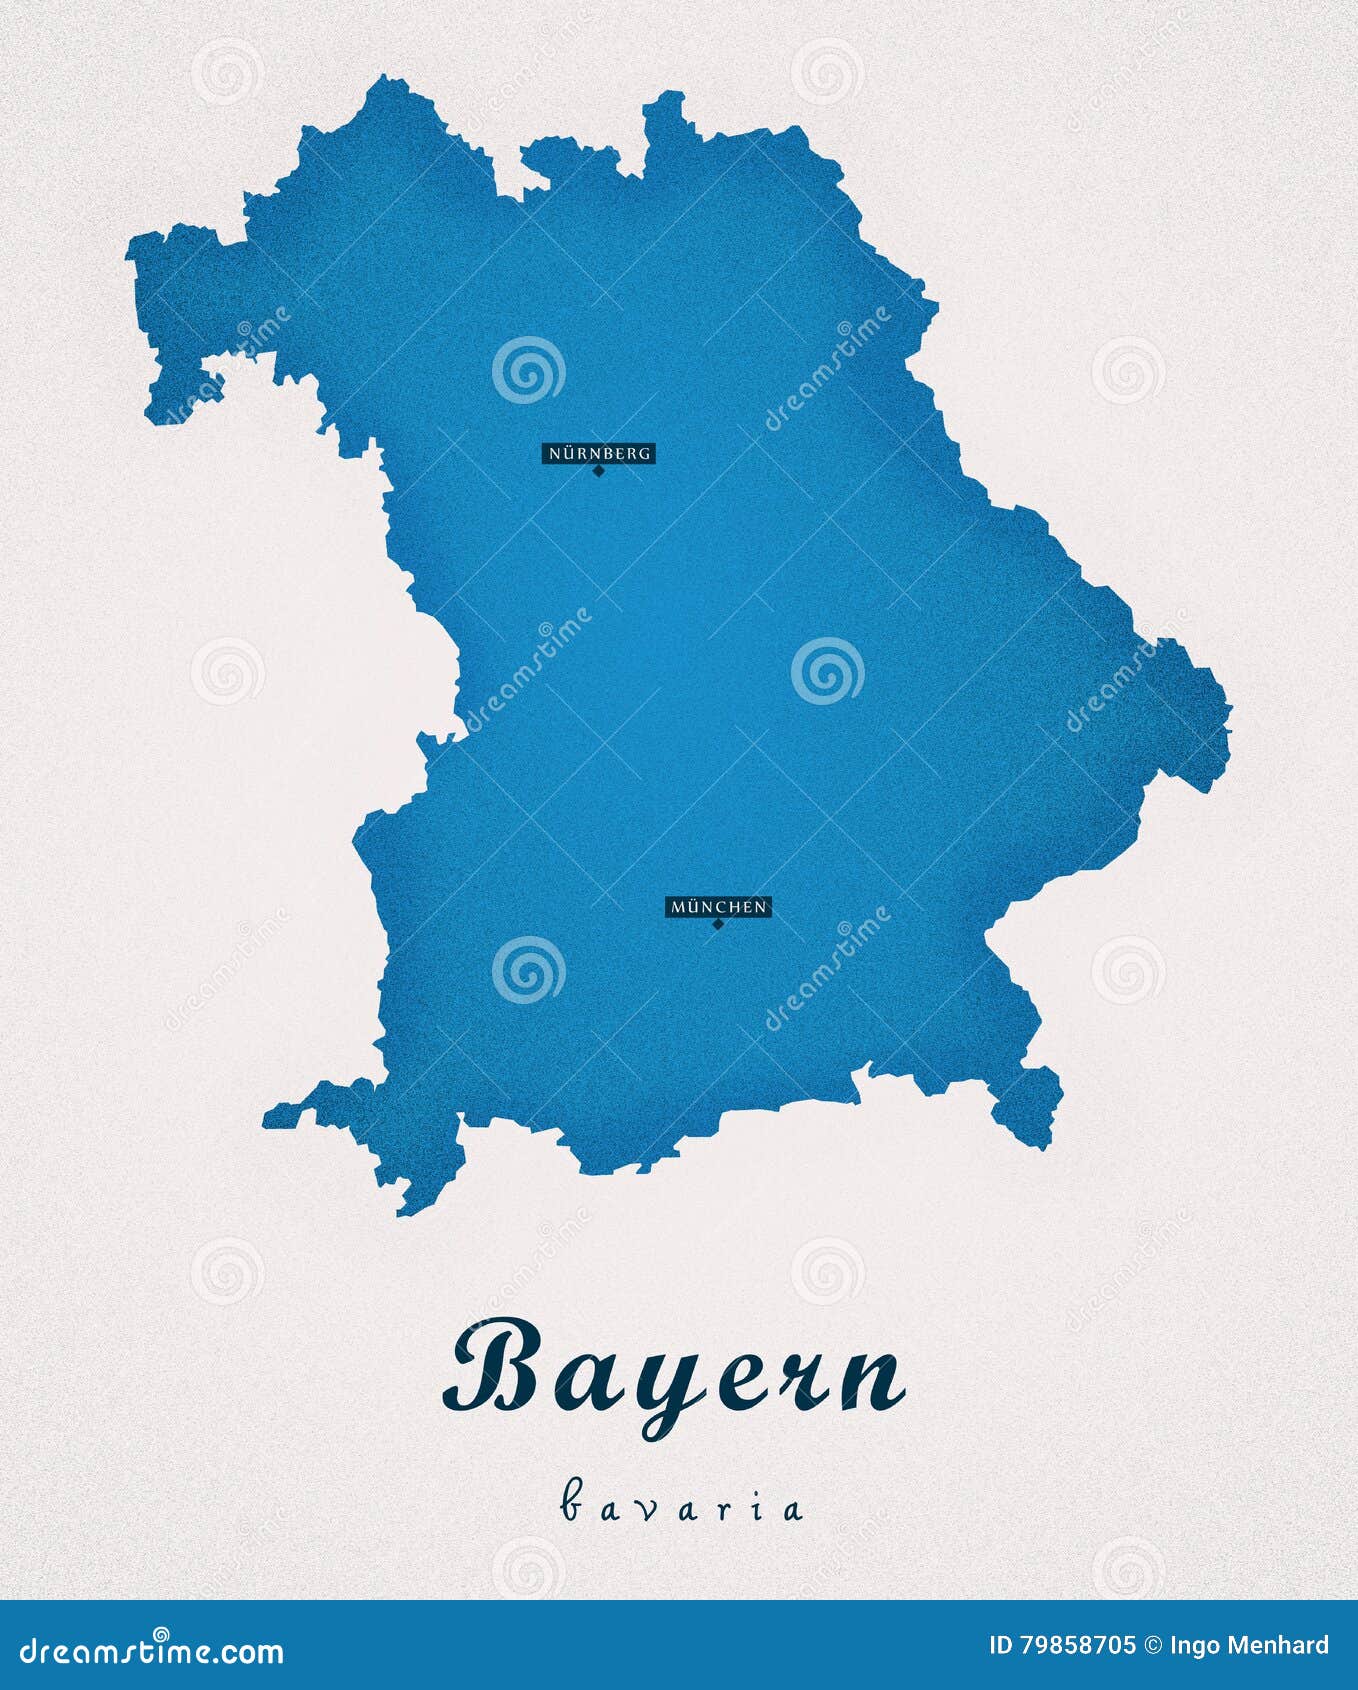 bayern germany art map